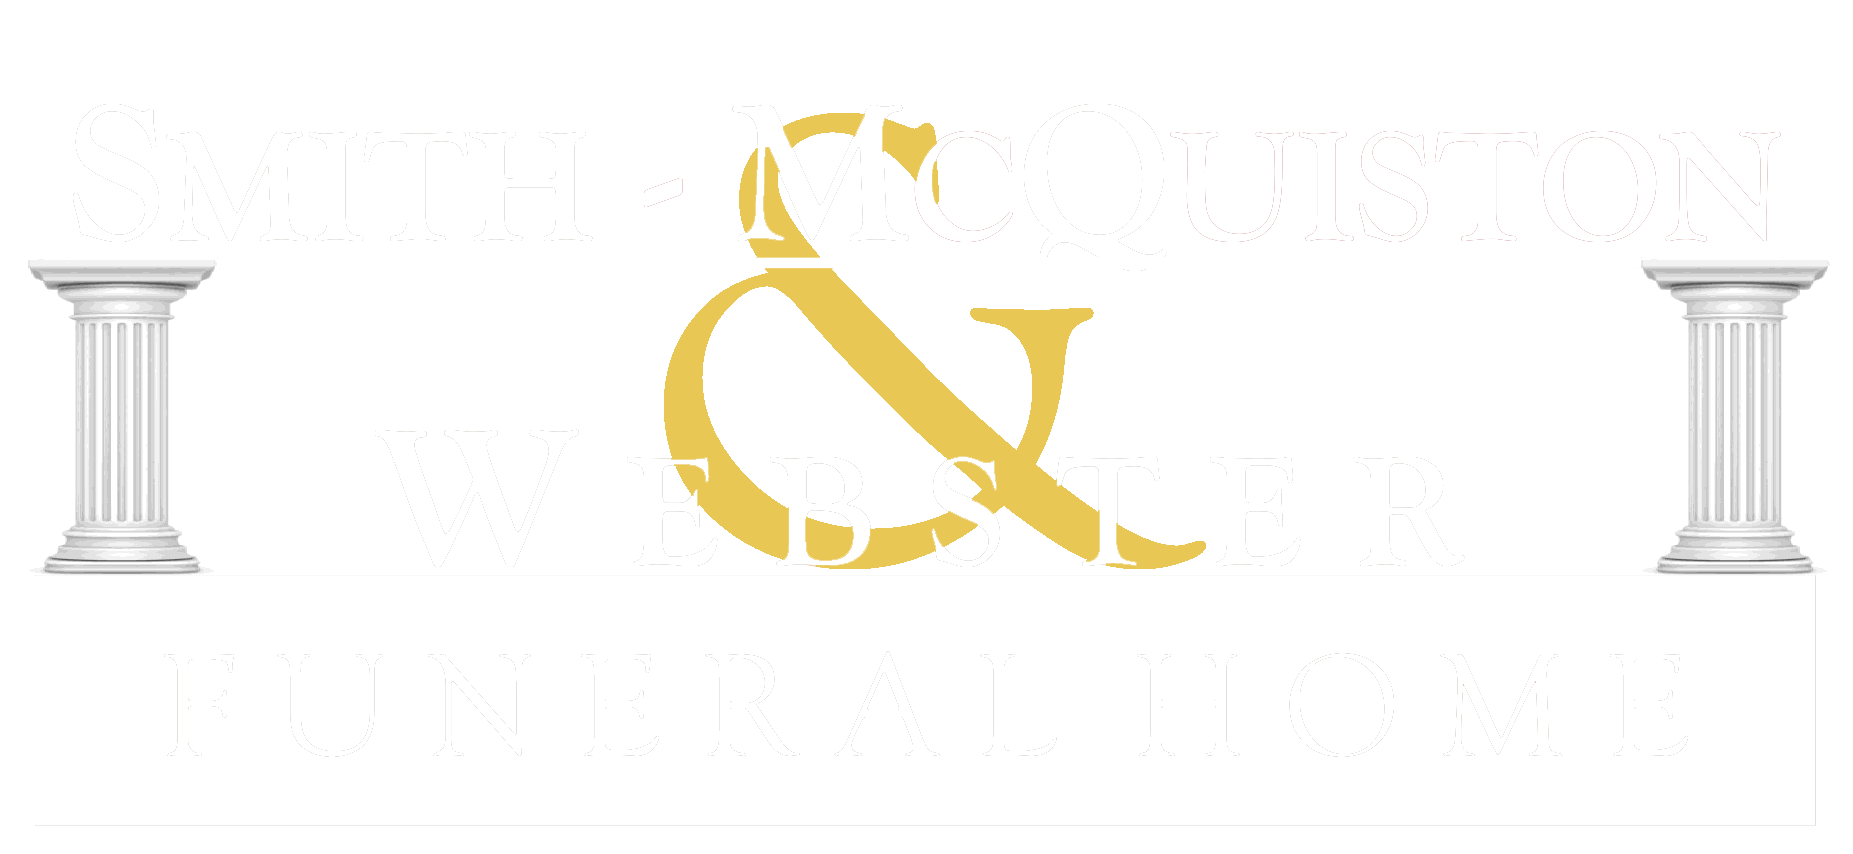 Smith-McQuiston & Webster Funeral Logo